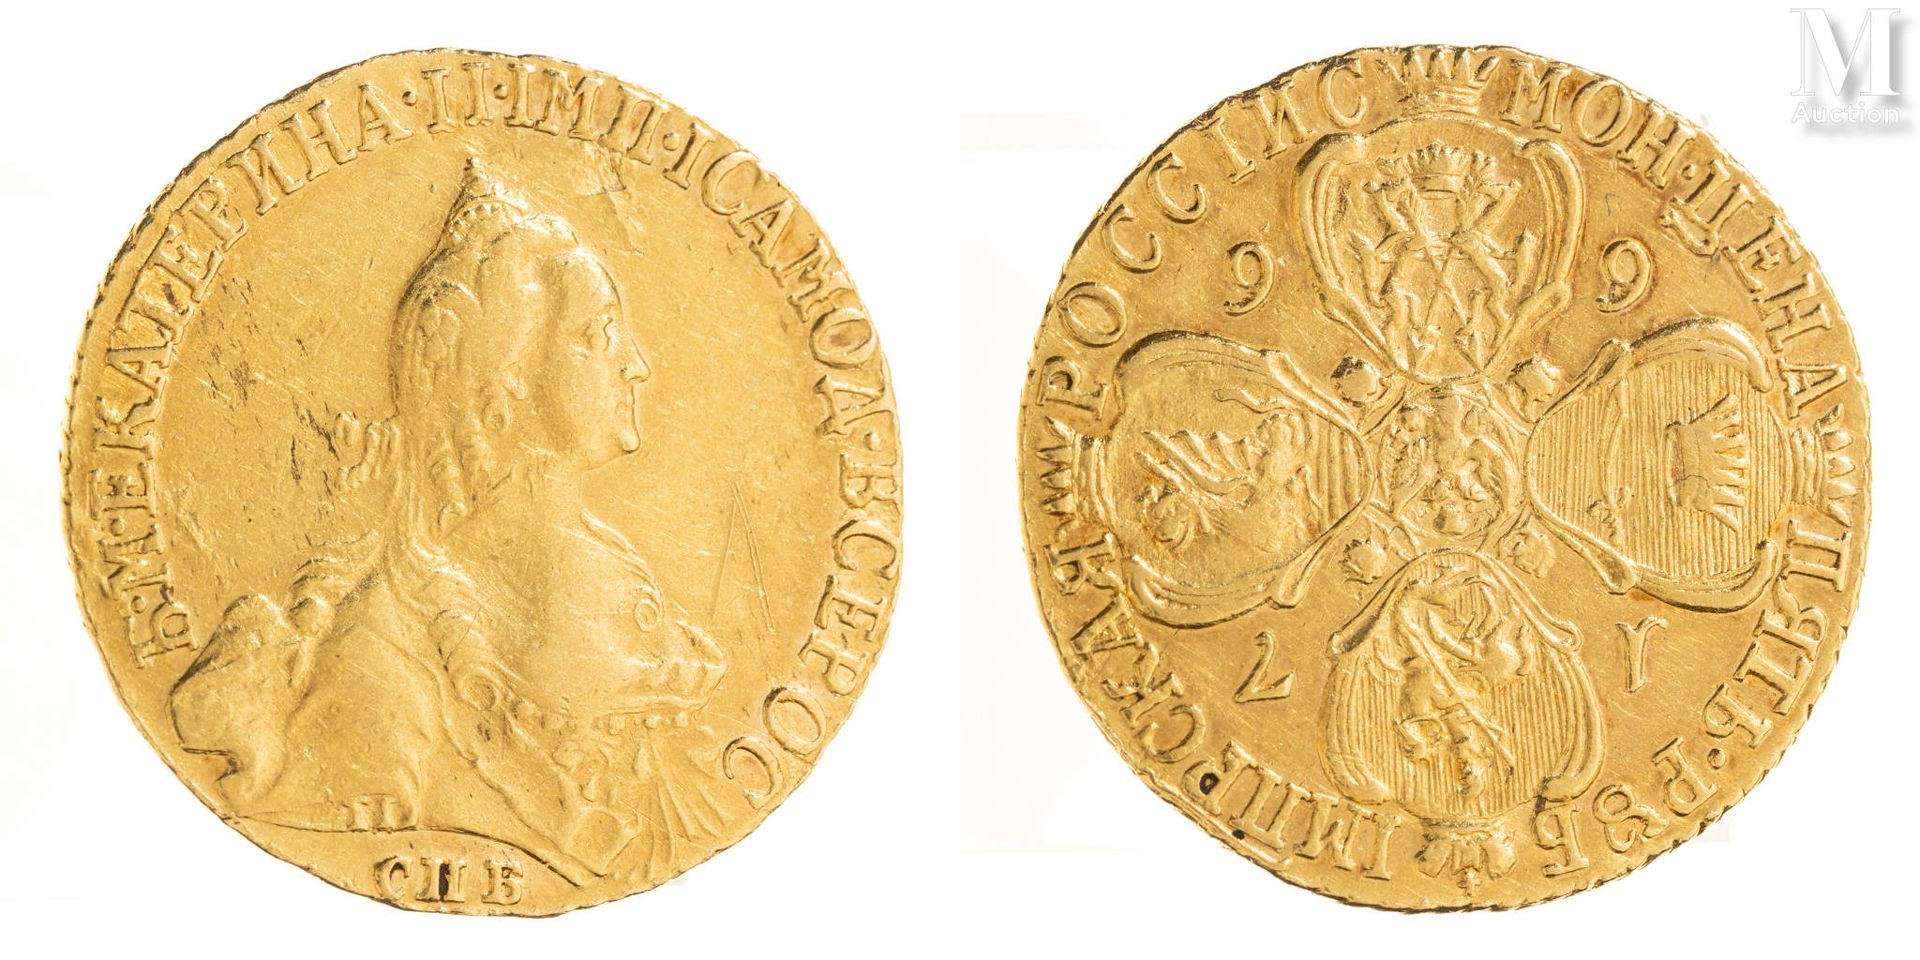 Russie - Catherine II (1762-1796) 5 Roubles 1766
A : Buste à droite de Catherine&hellip;